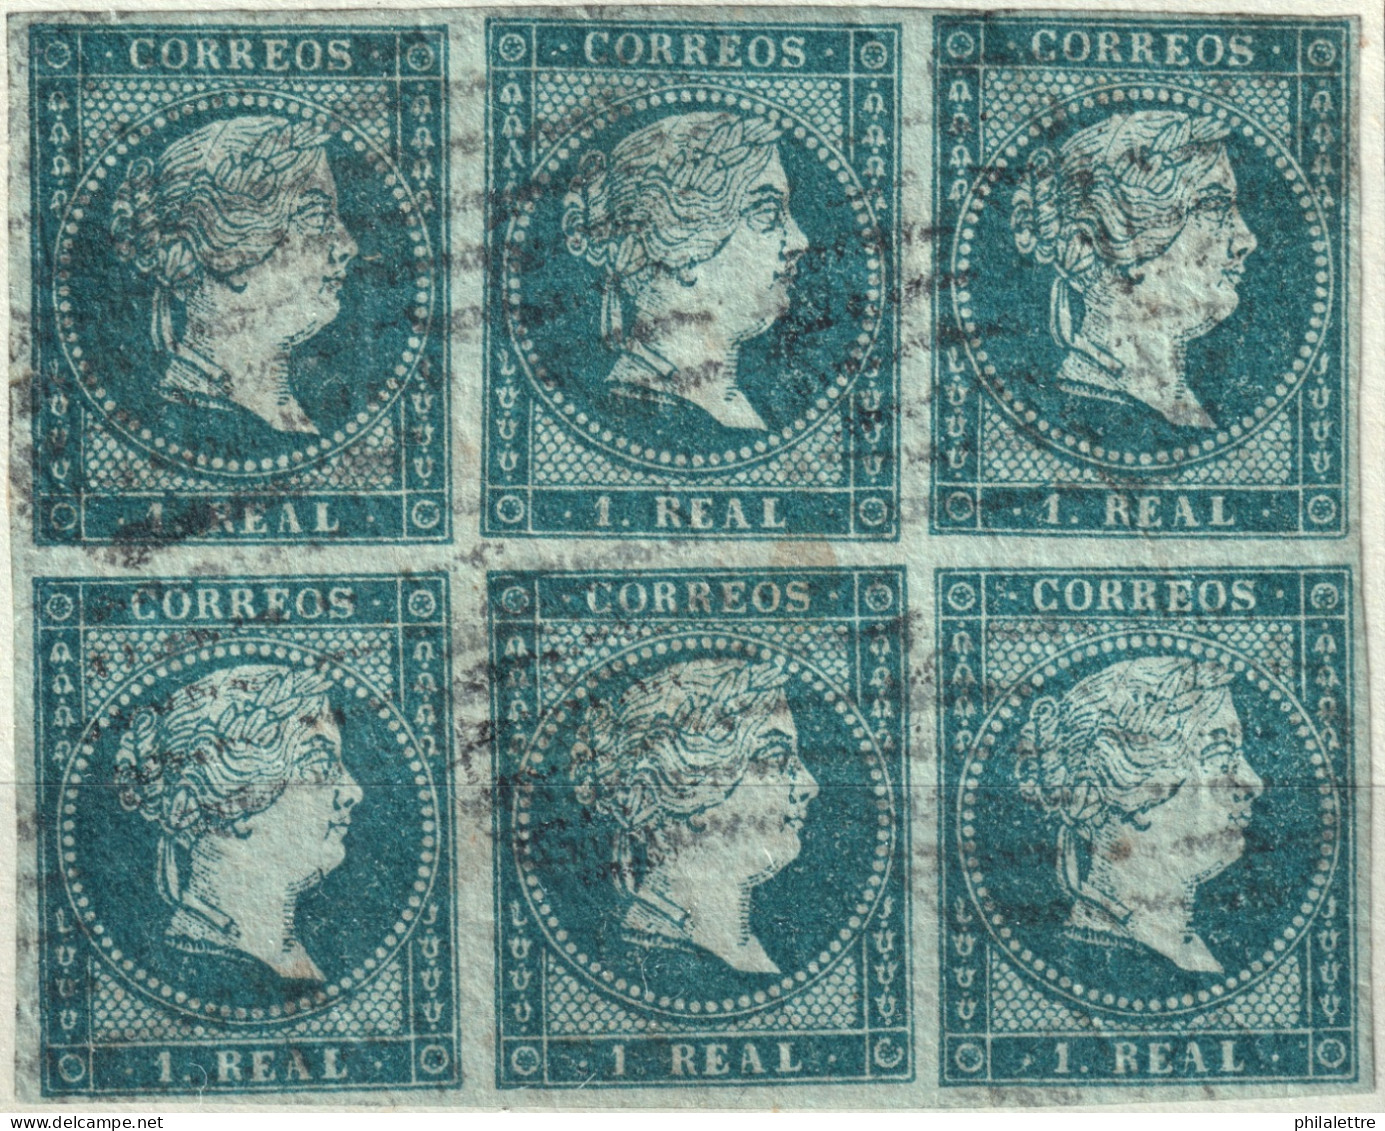 ESPAGNE - ESPAÑA - 1855 Ed.41 1R Azul Verdoso - Bloque De 6 Usado Parilla Negra - (fil. Lazos) - Gebruikt